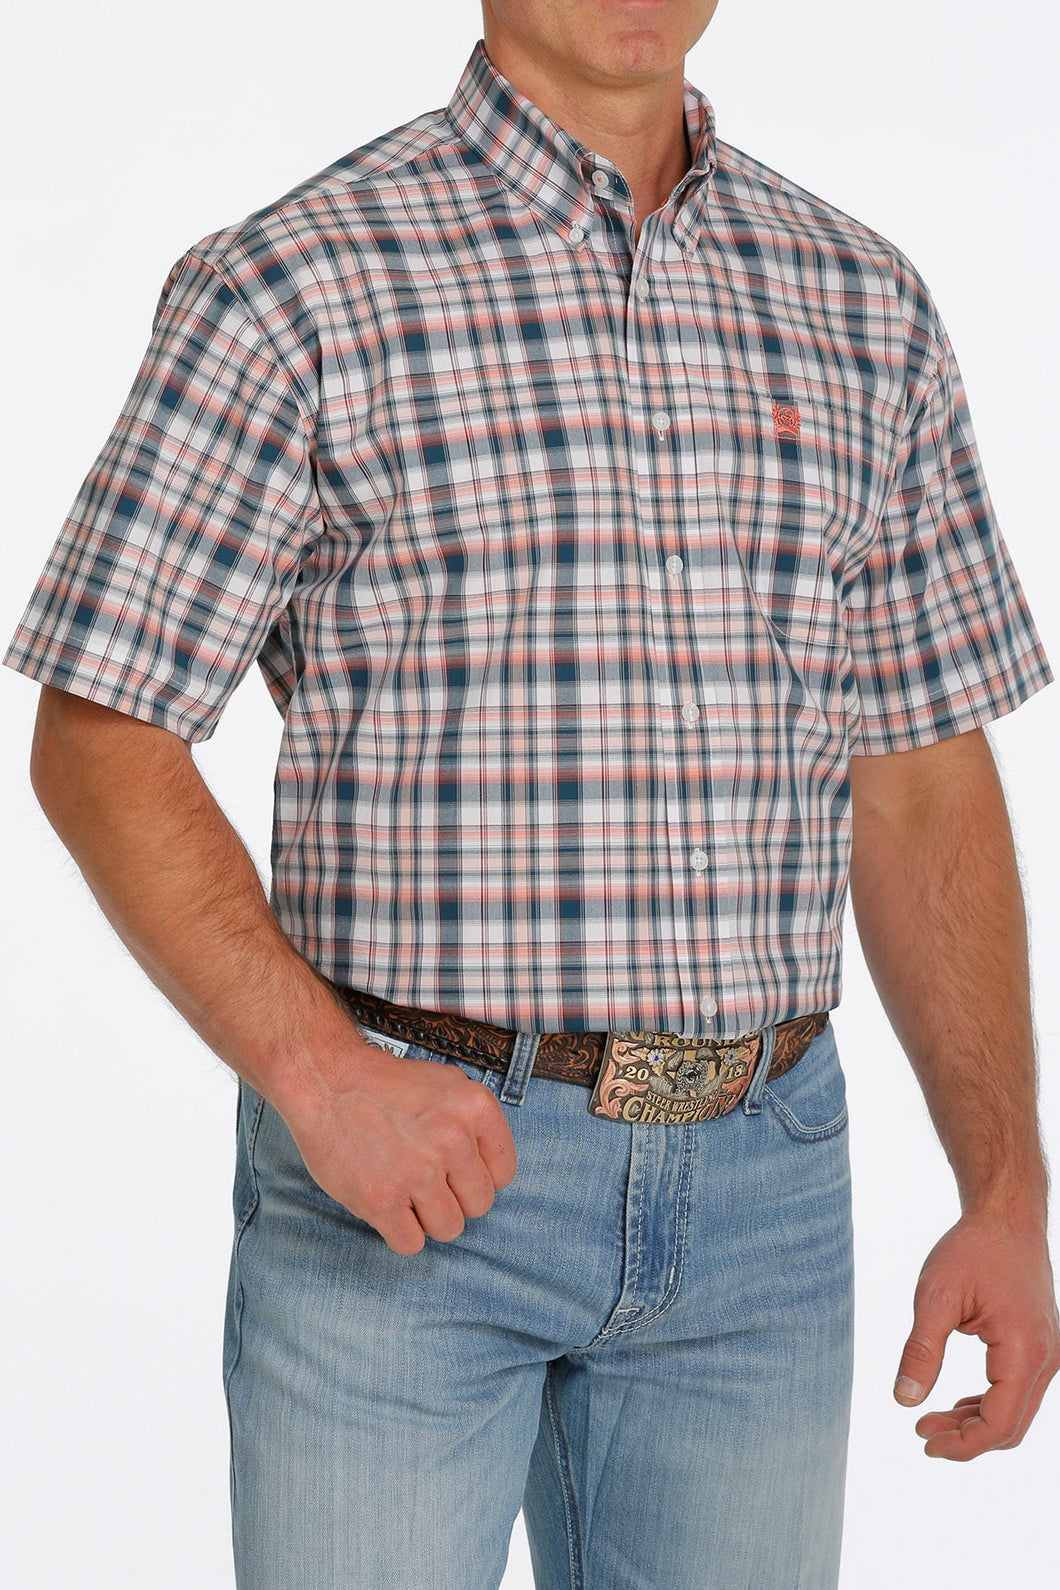 'Cinch' Men's Plain Short Sleeve Button Down Shirt - White